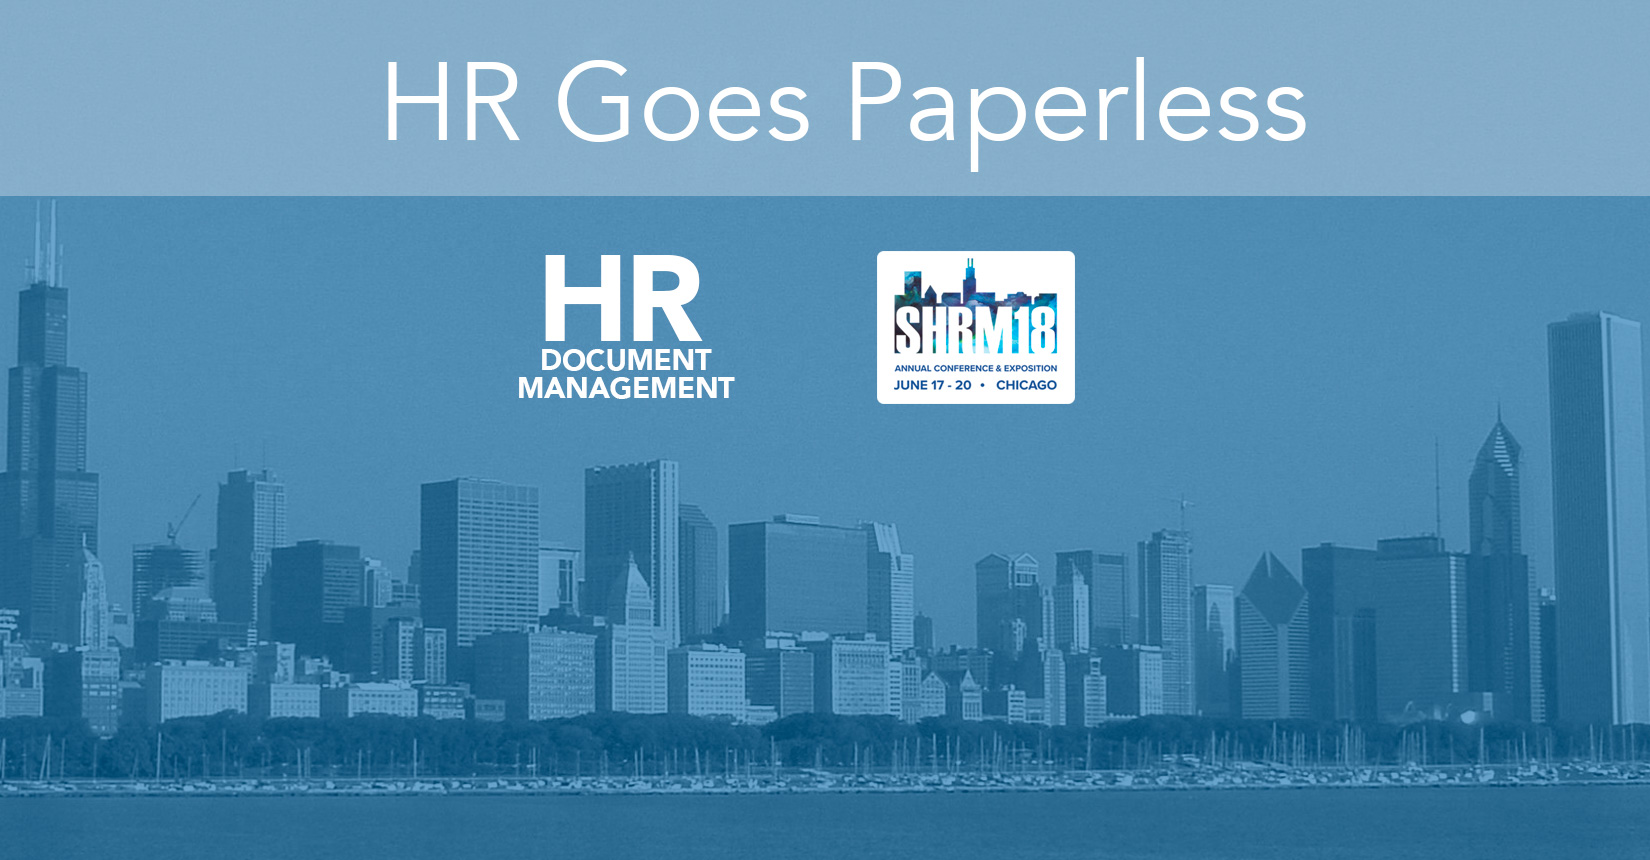 SHRM 2018 HR Conference HR Document Management